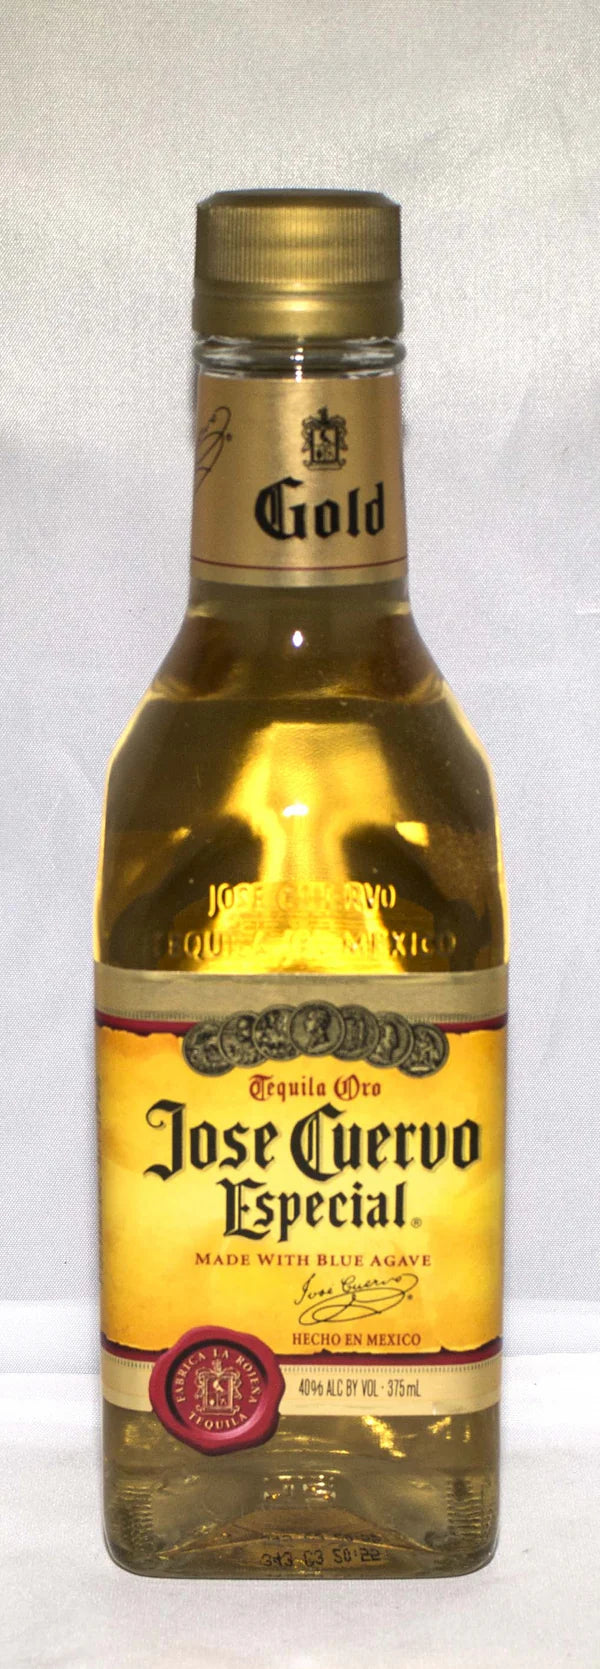 Jose Cuervo Especial Gold Tequila | 375ML